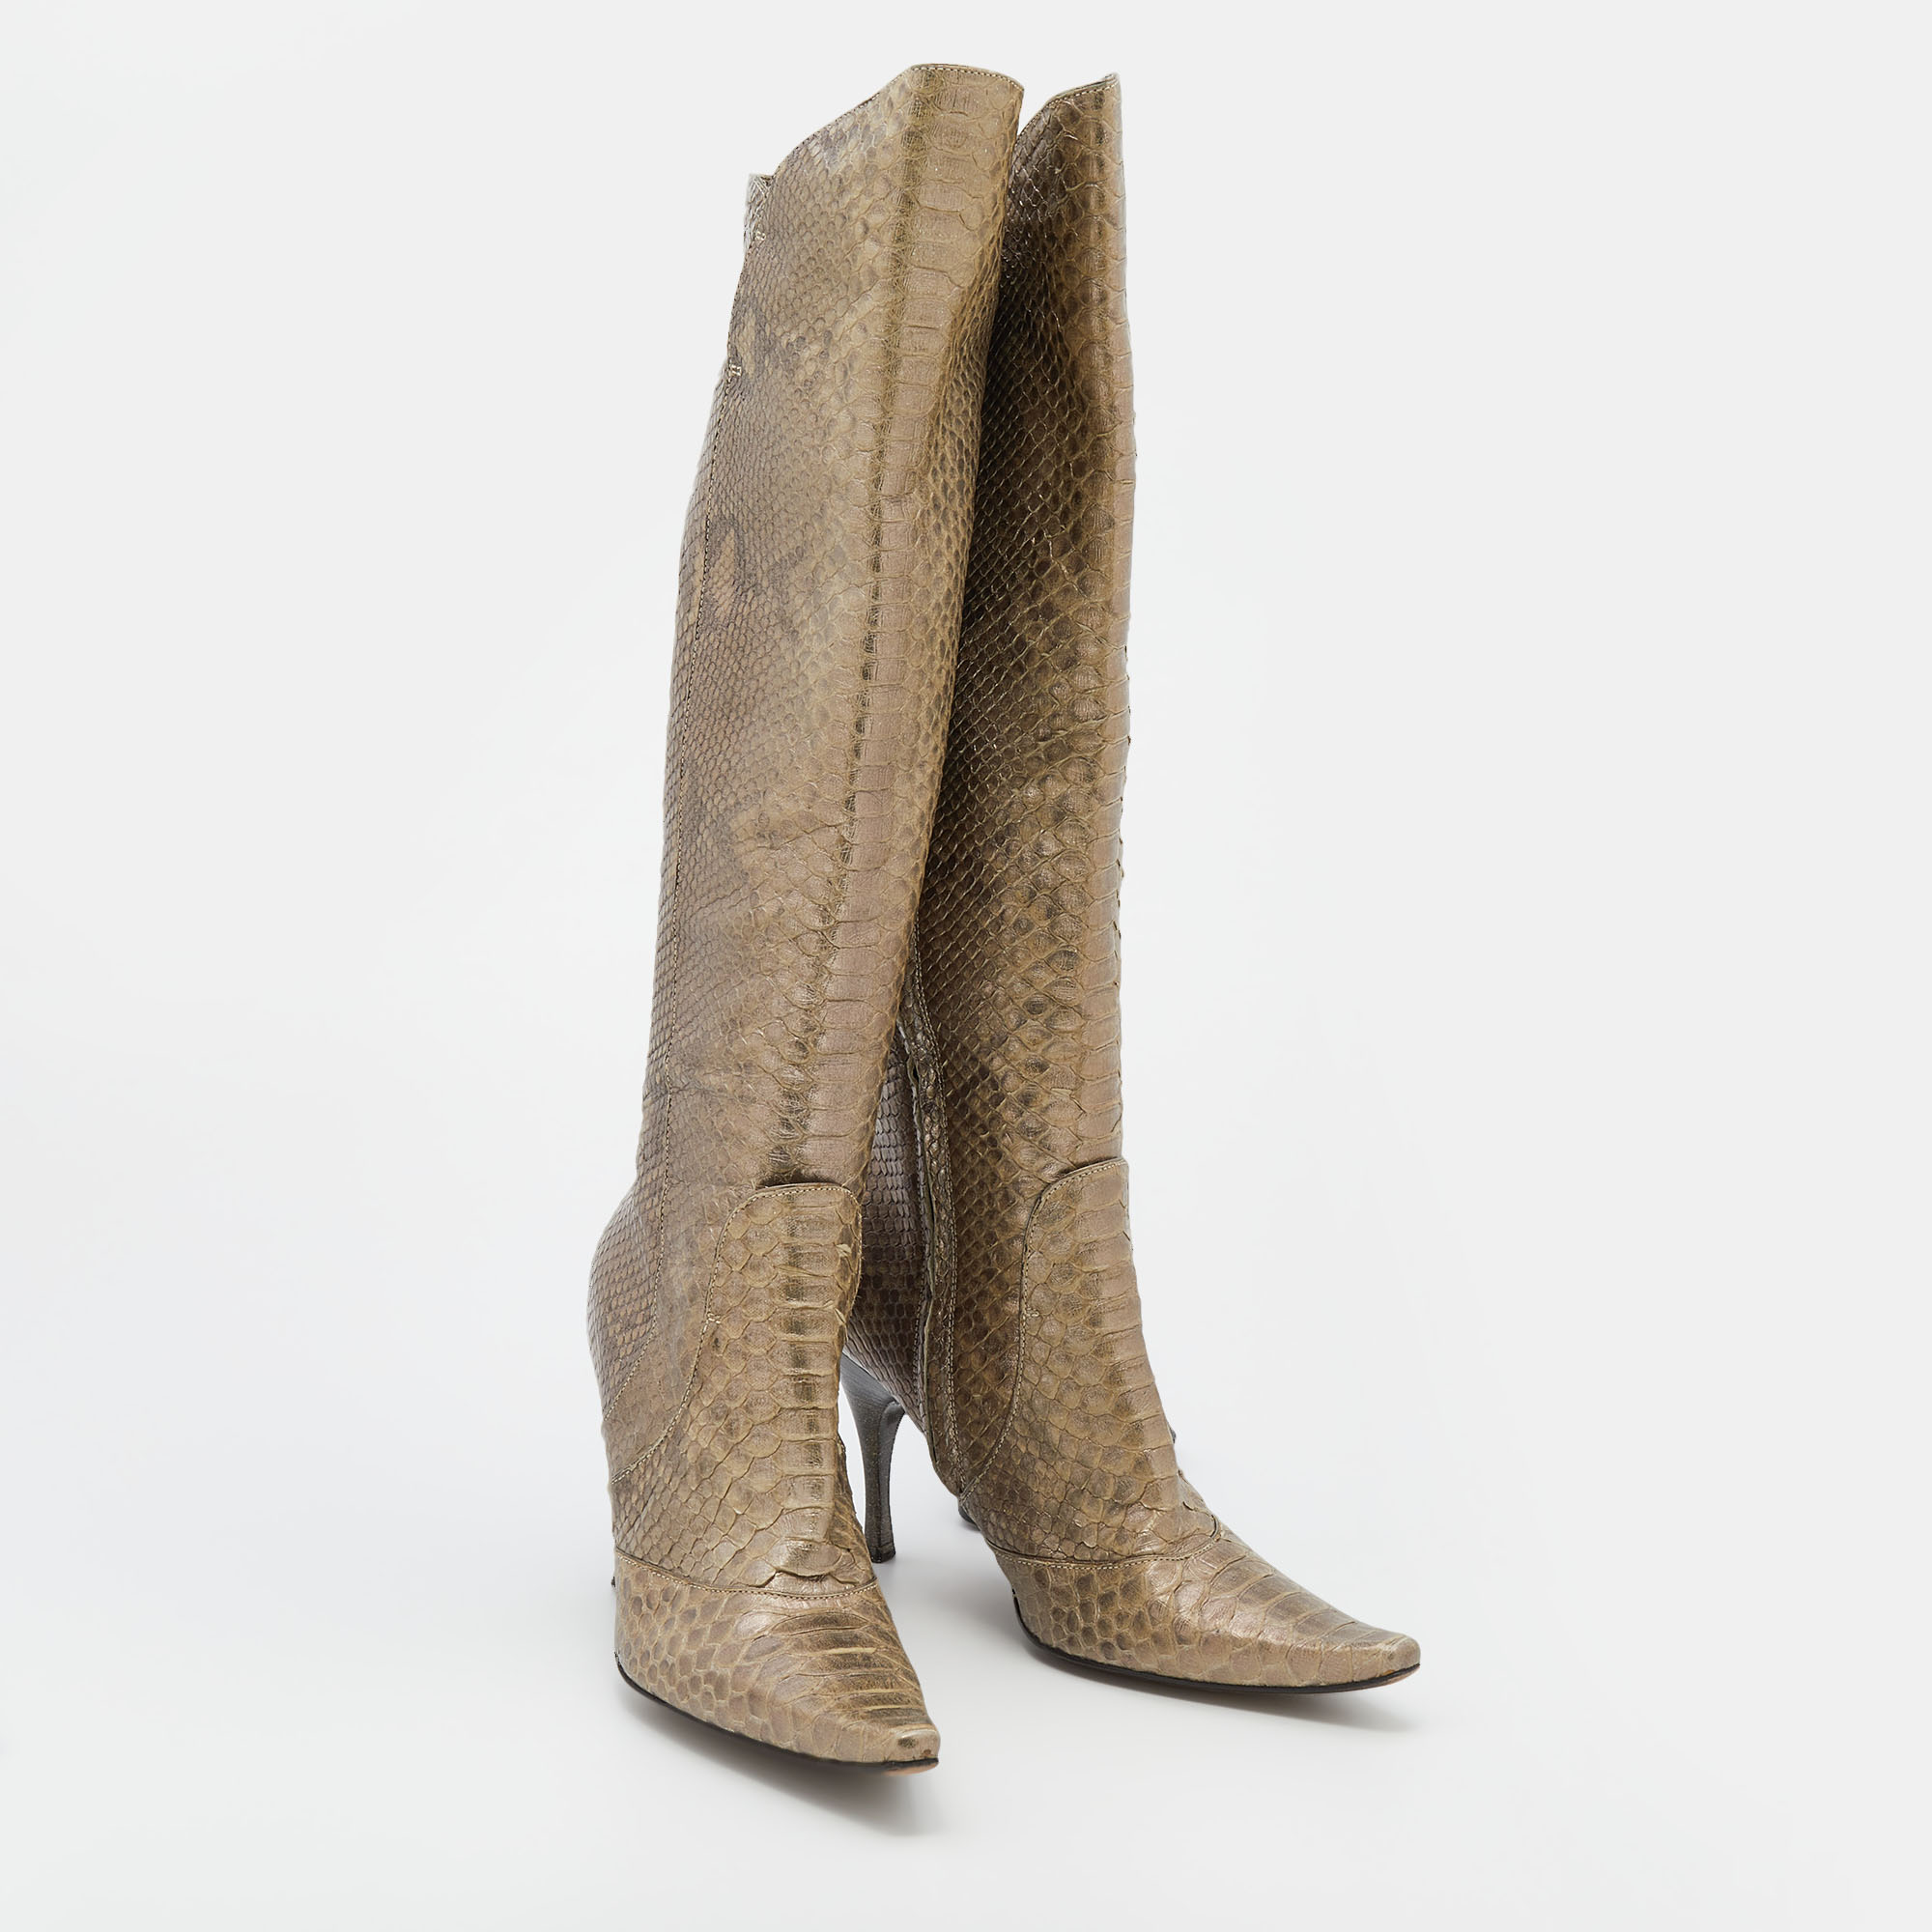 Bottega Veneta Metallic Python Knee Length Boots Size 38